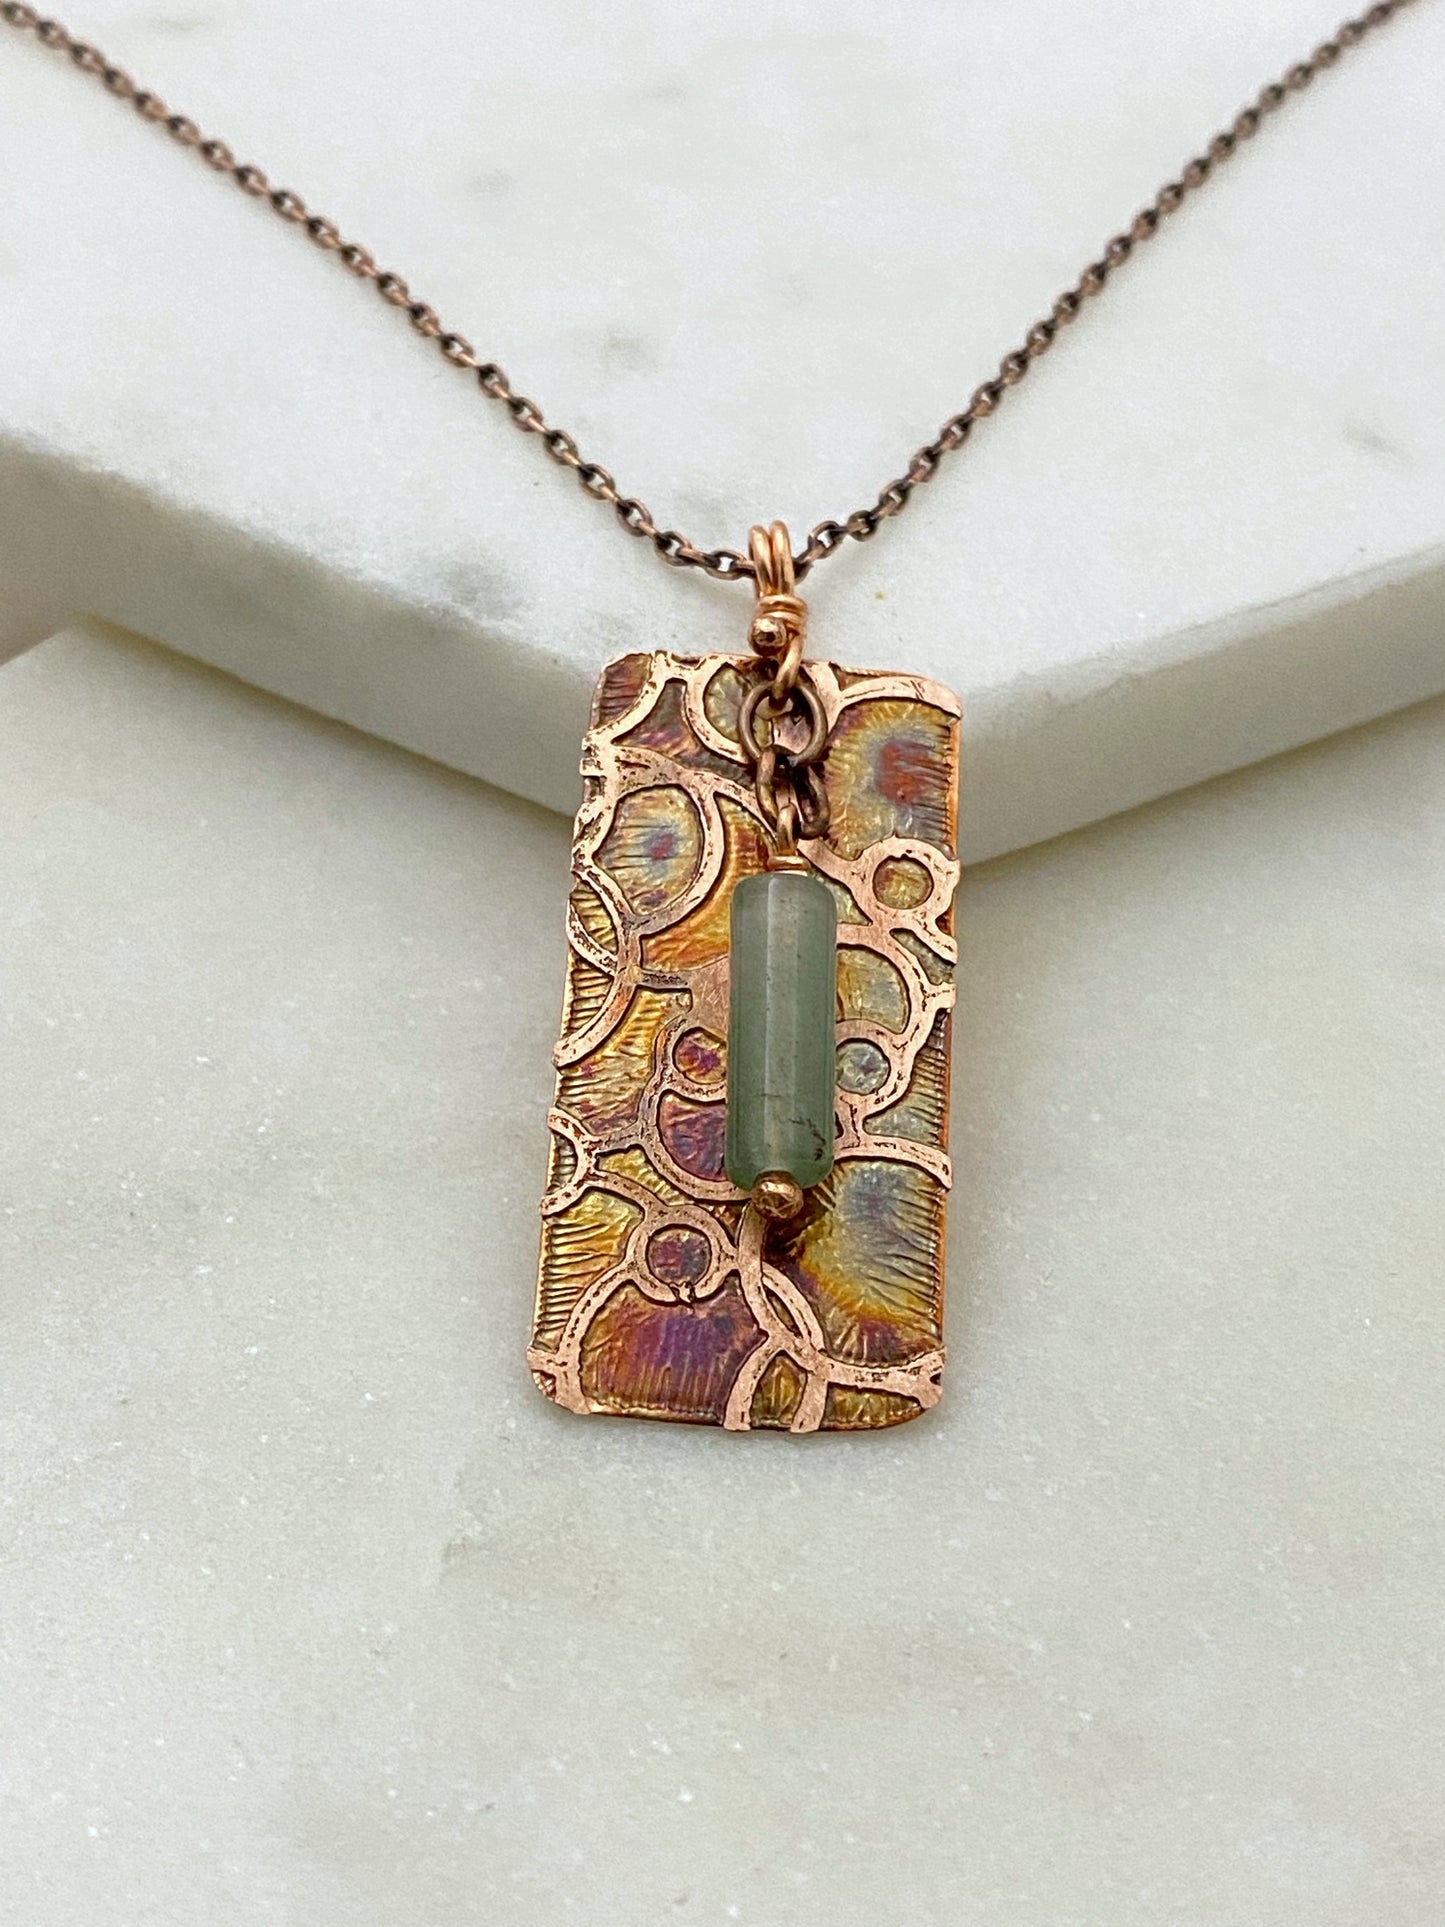 Acid etched copper necklace with aventurine gemstone